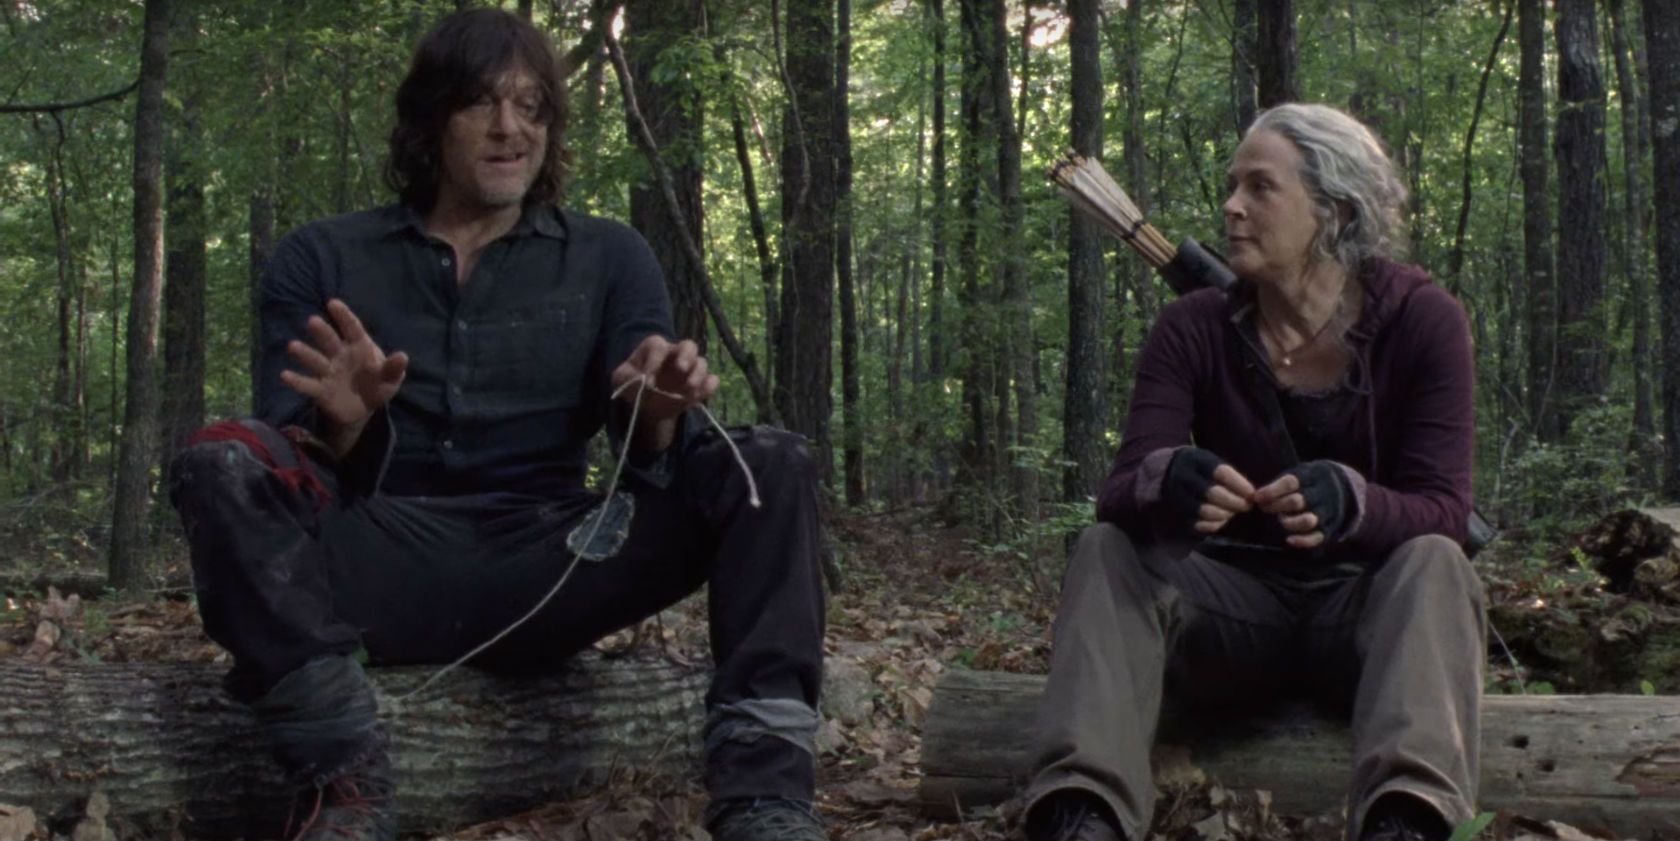 Daryl and Carol in The Walking Dead season 10 trailer